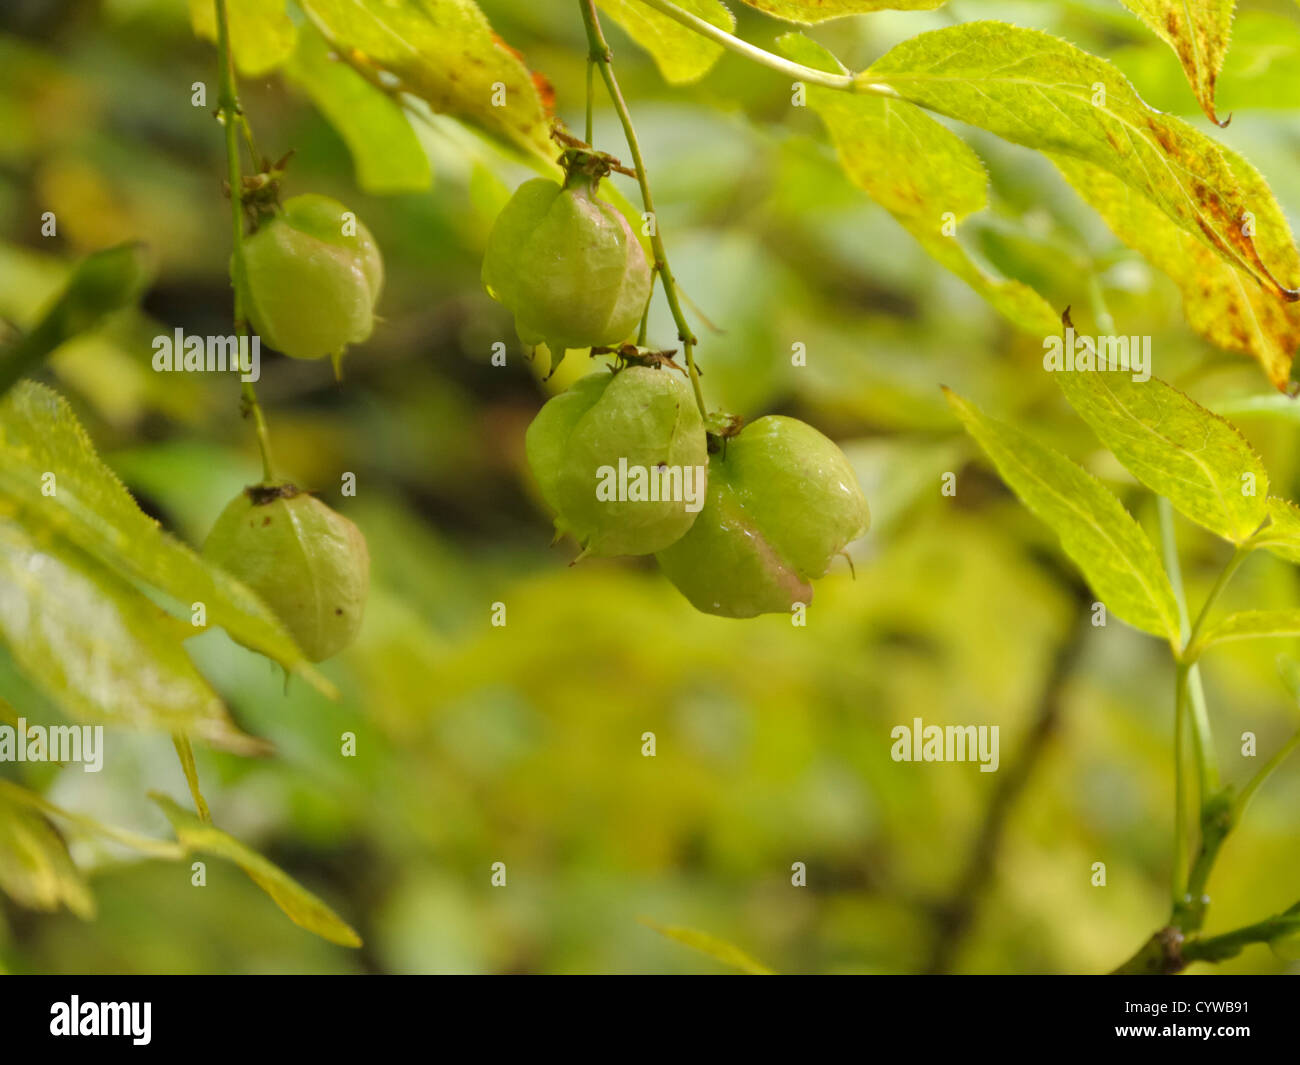 Bladdernut, Staphylea pinnata fruits Stock Photo